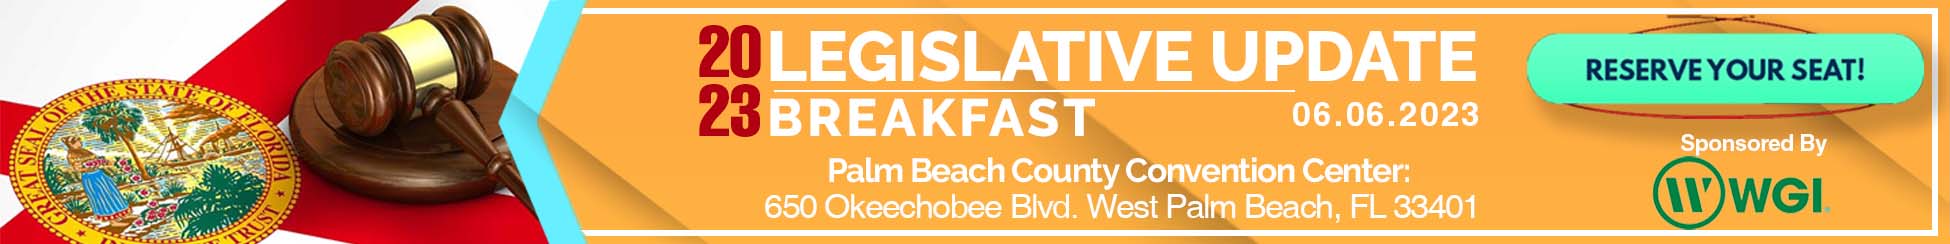 legislative update breakfast email signature